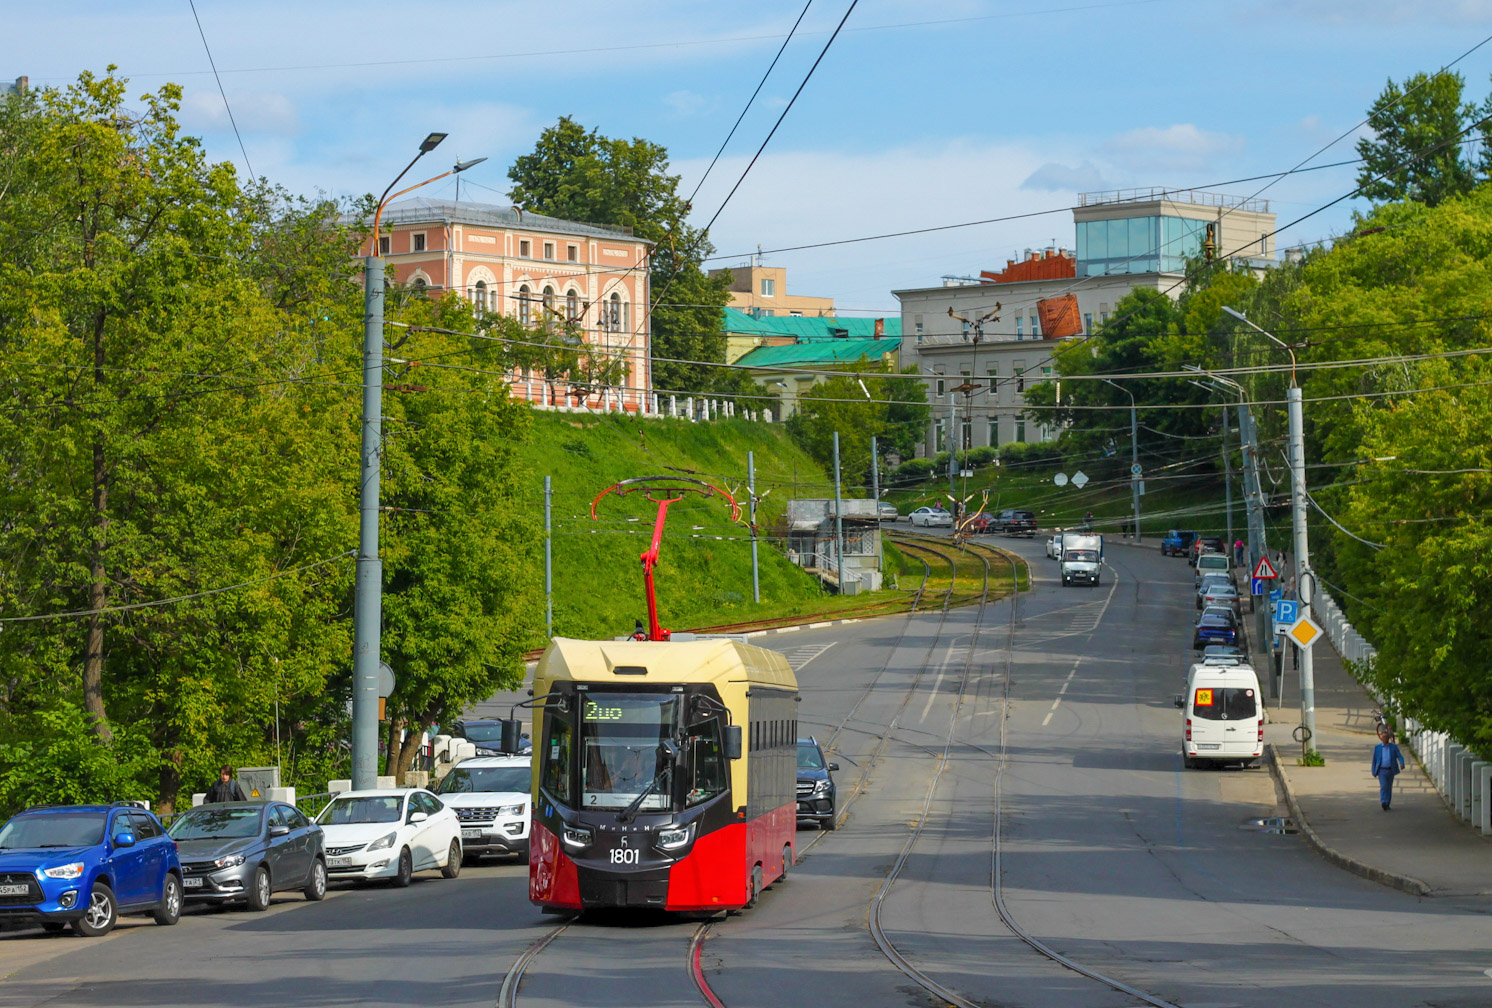 Nischni Nowgorod, BKM T811 "MiNiN" Nr. 1801; Nischni Nowgorod — Tram lines